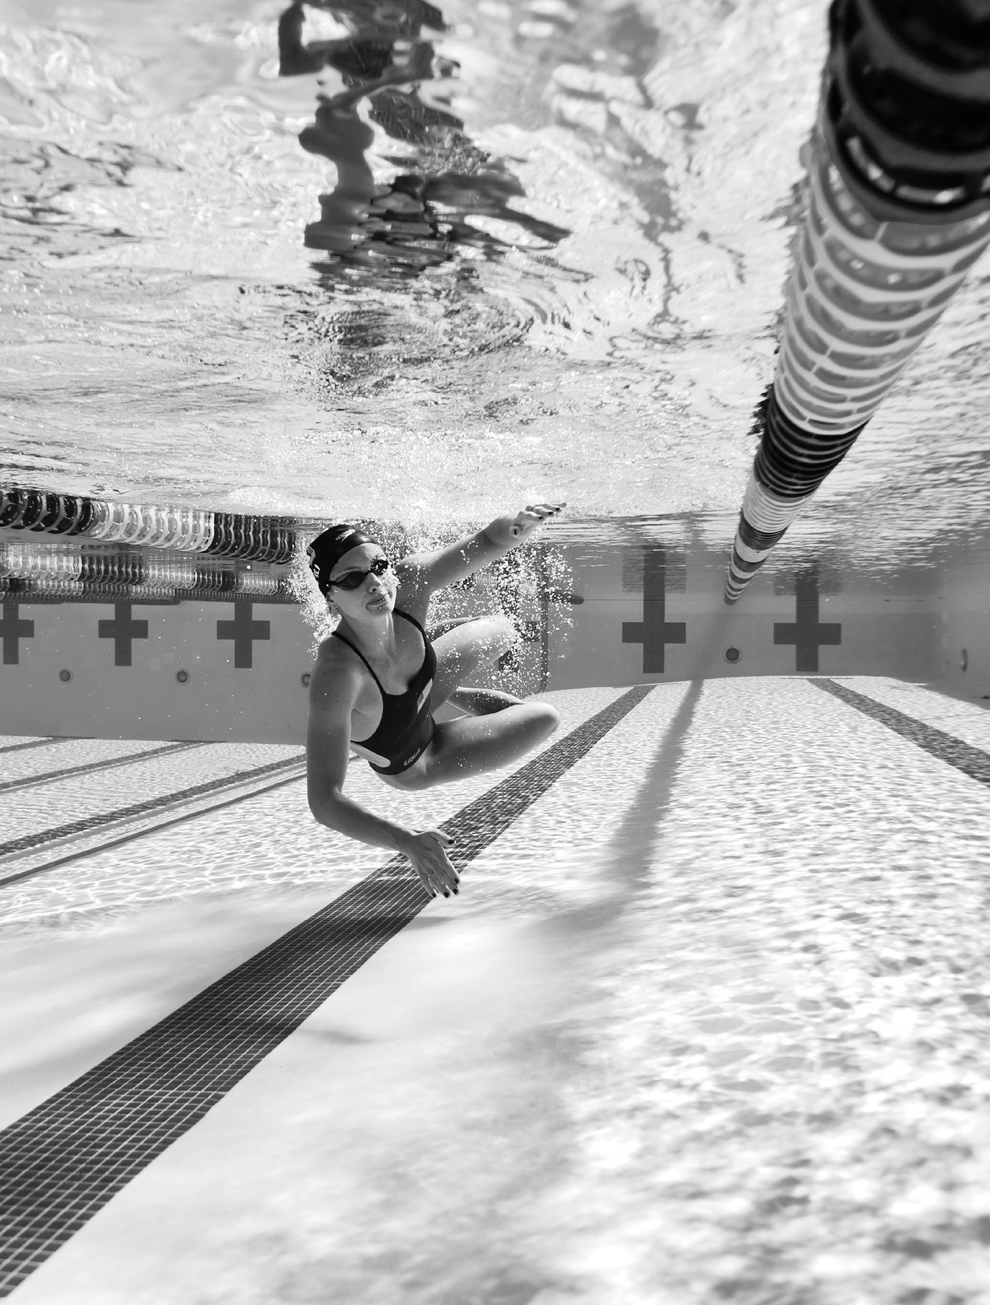 Katie Meili ’13 photographed under water